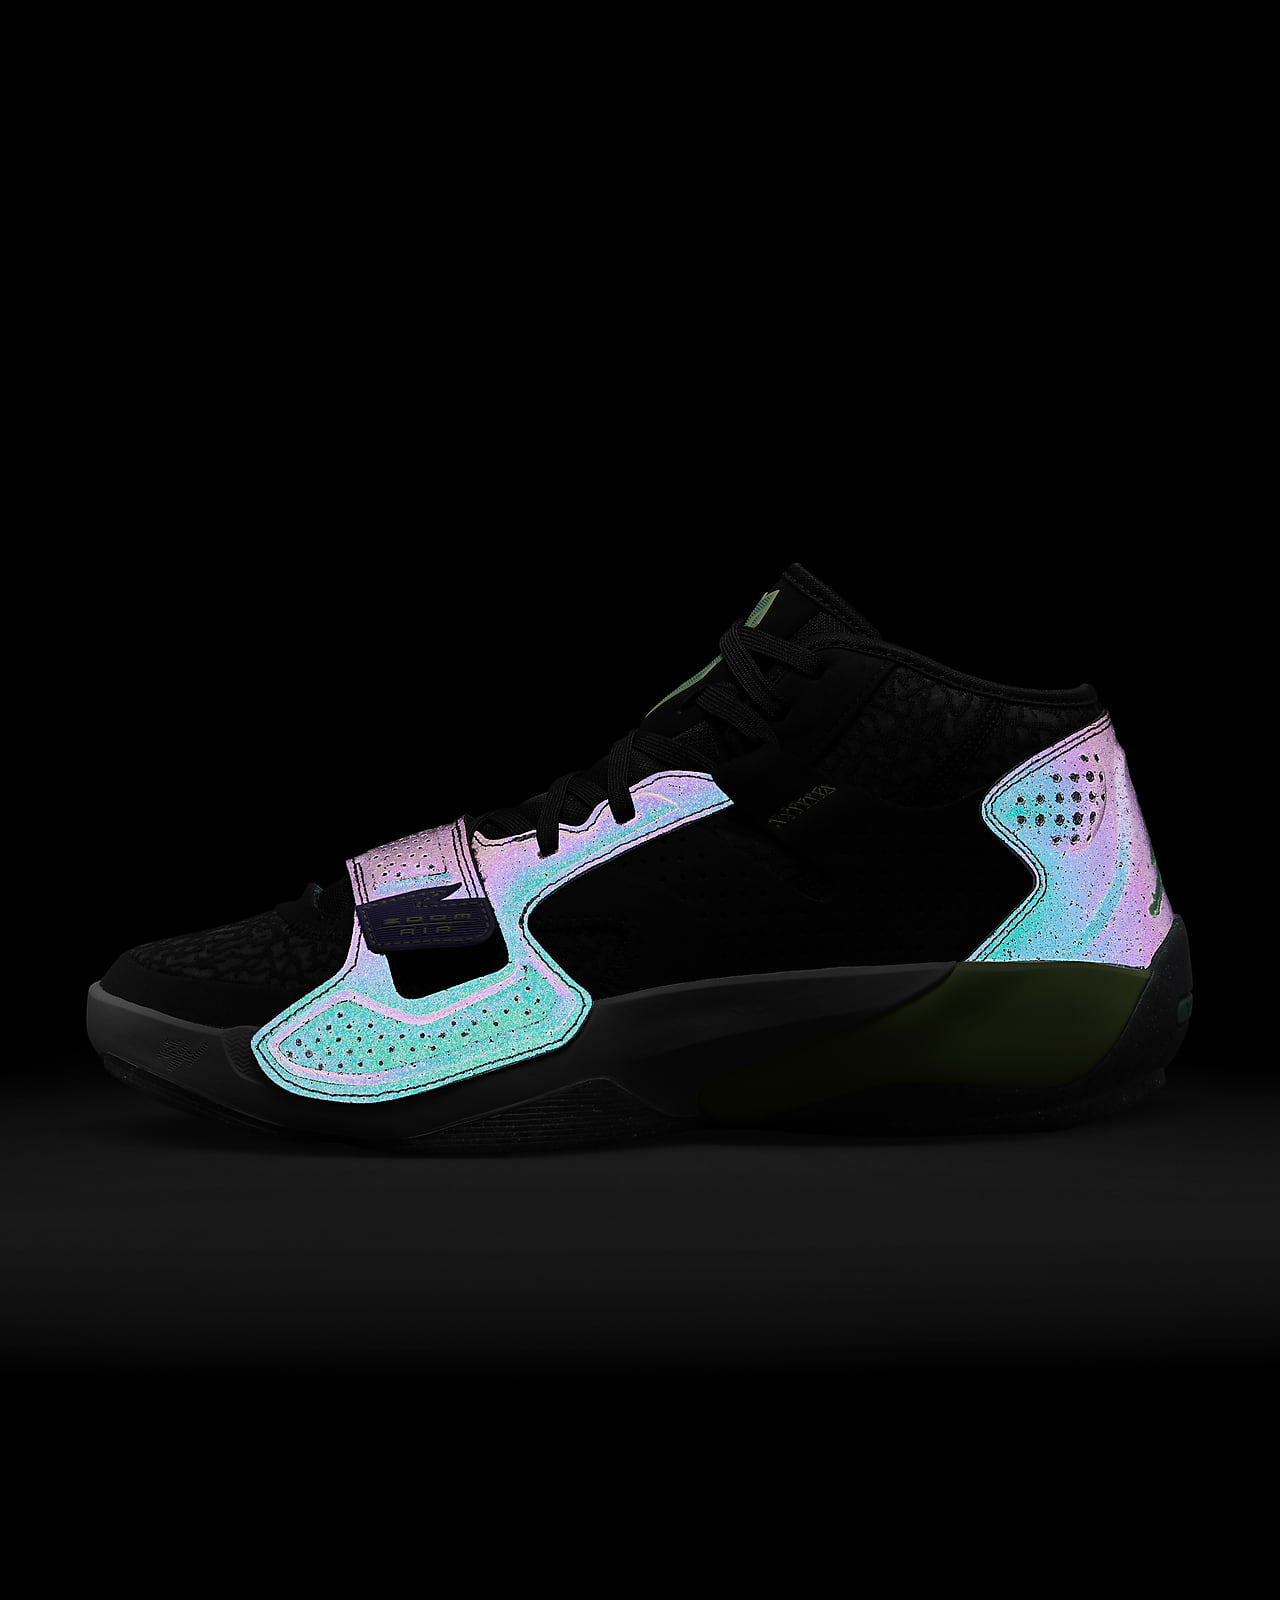 Zion 2 Zapatillas baloncesto - Hombre. Nike